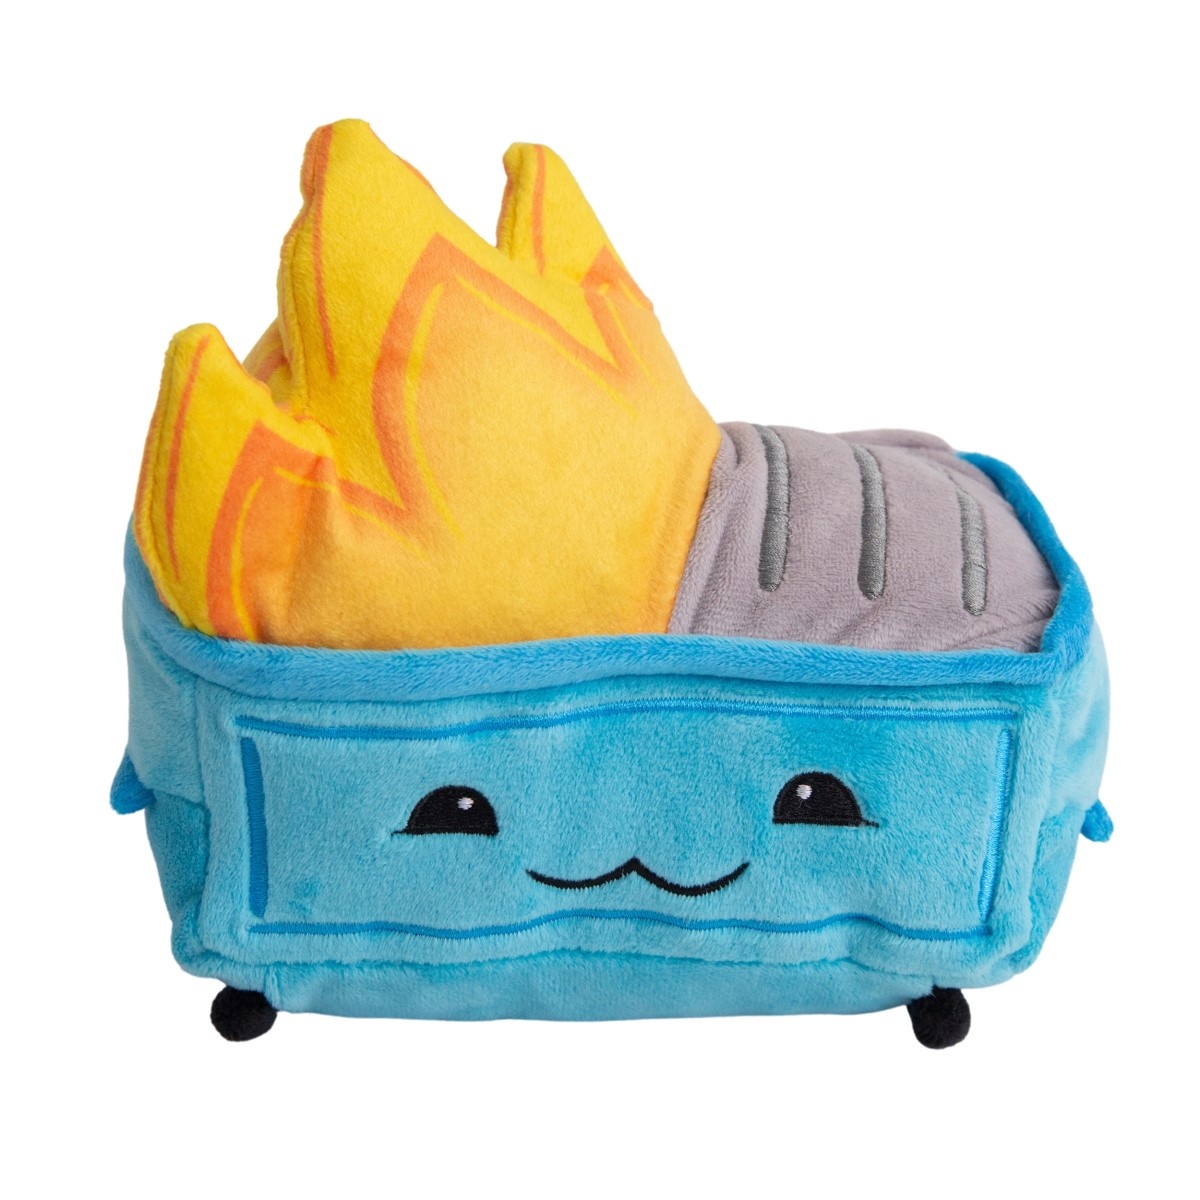 SnugArooz Dumpster Fire Dog Toy